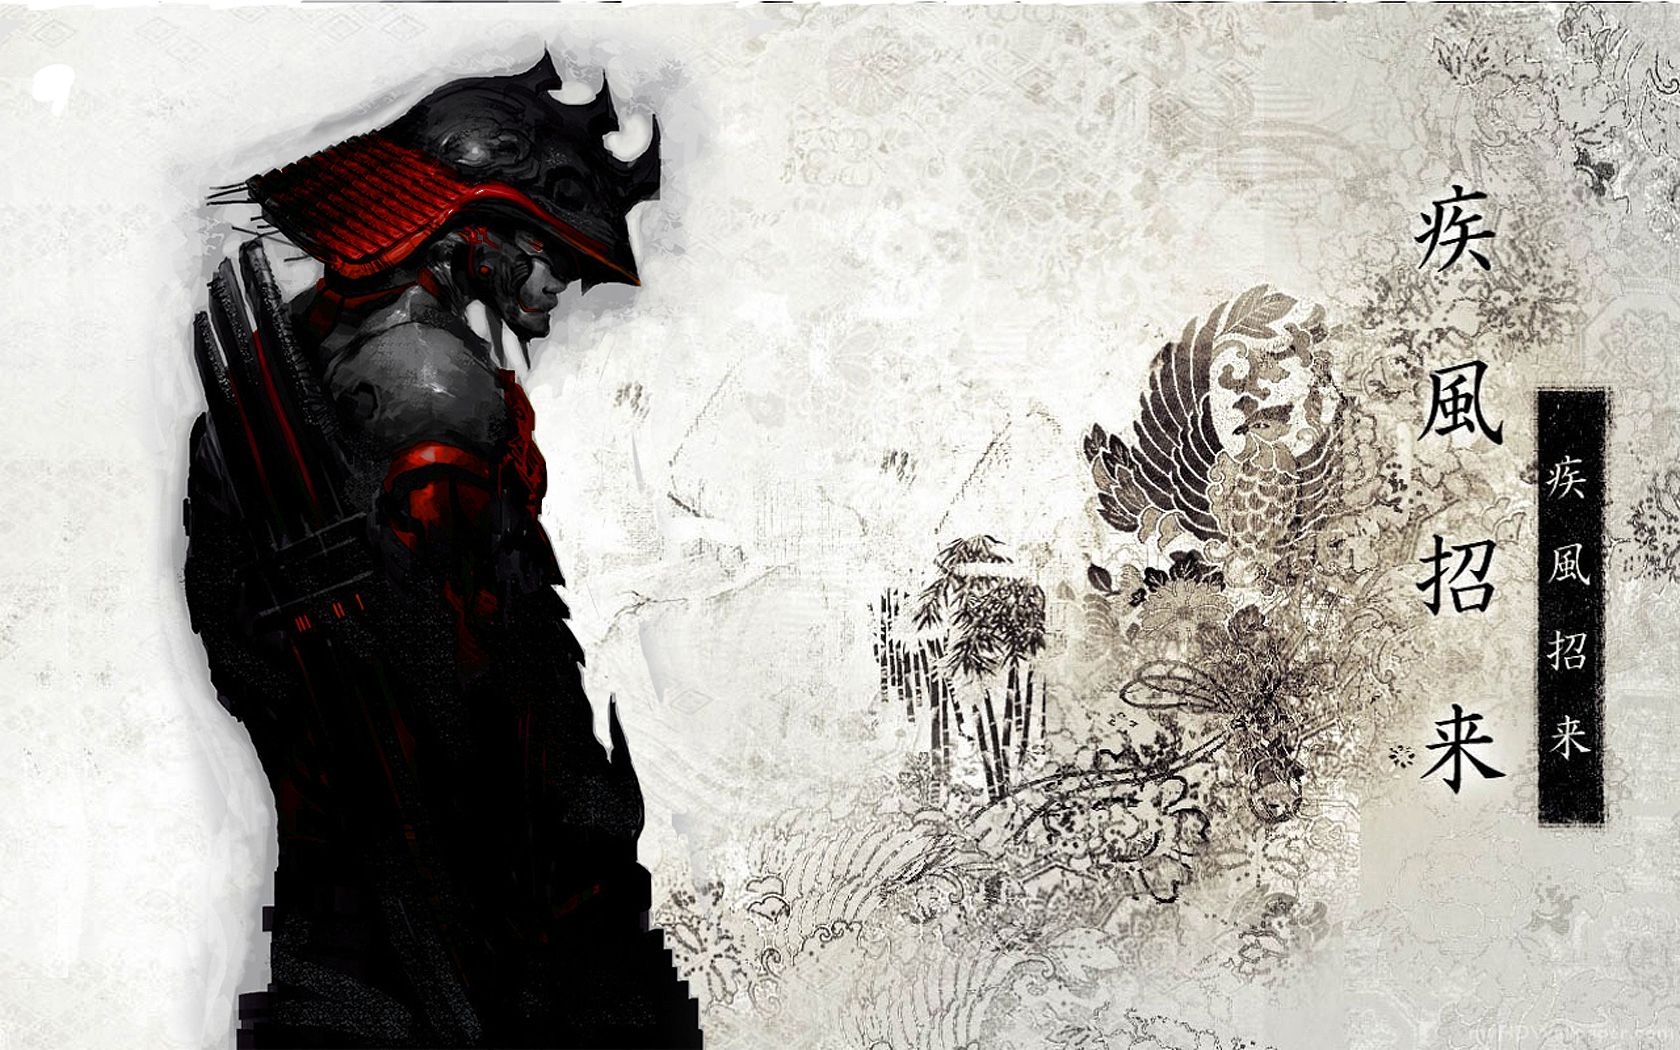 Samurai Background. Skeleton Samurai Wallpaper, Samurai Wallpaper and Samurai Stormtrooper Wallpaper